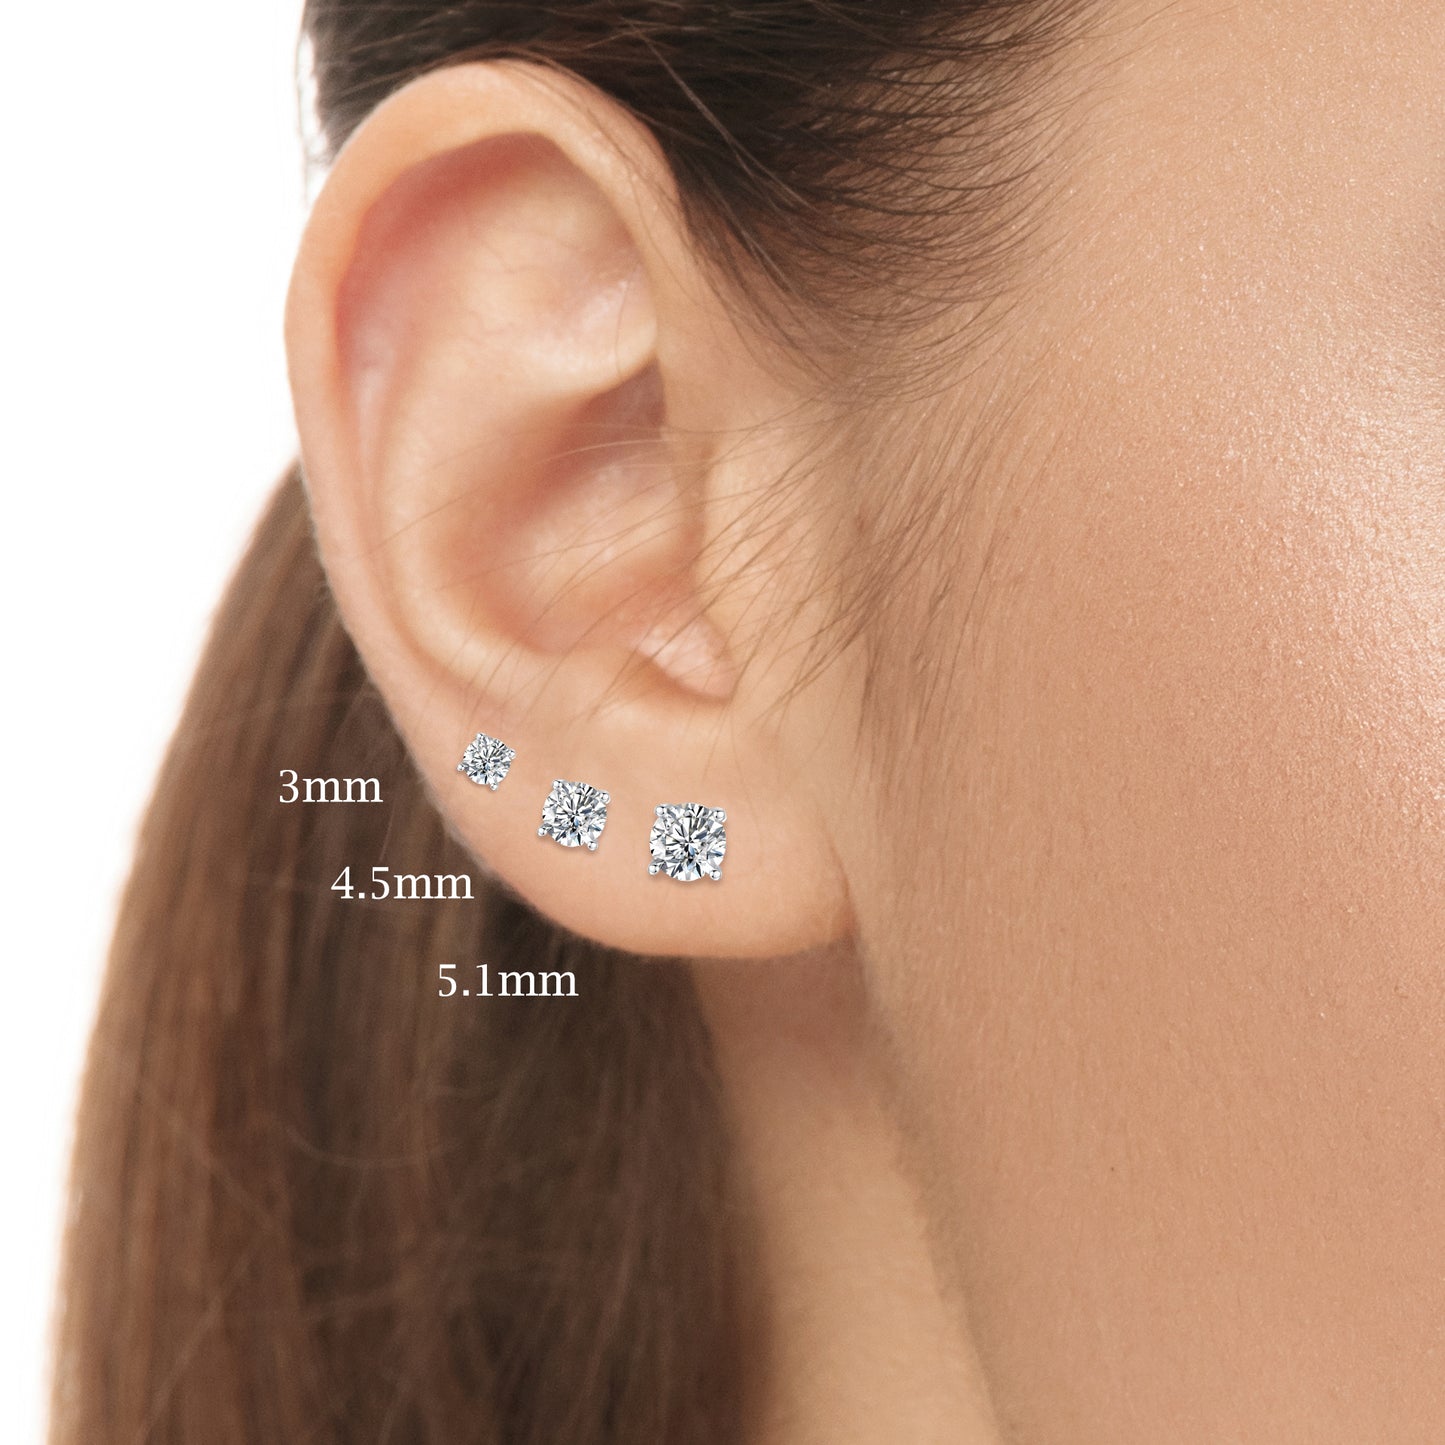 TAKA Jewellery Round Brilliant Lab Grown Diamond Earrings 10K